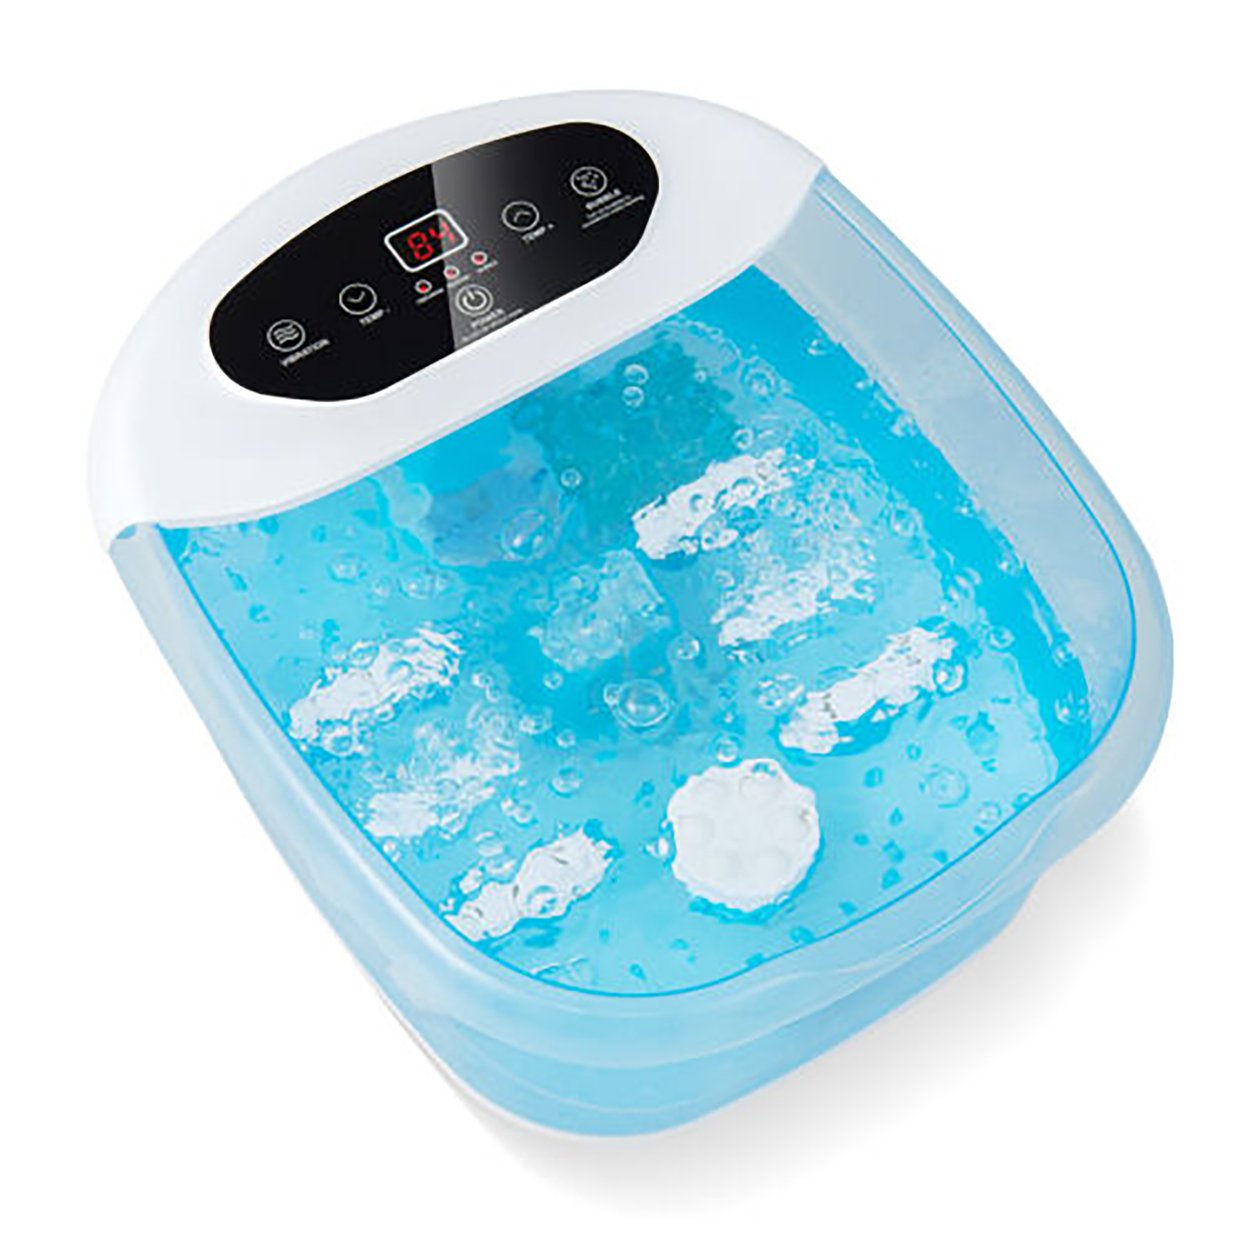 Foot Spa Massager Foot Bath Soak Tub With Heat Bubble Massage Beads - Blue